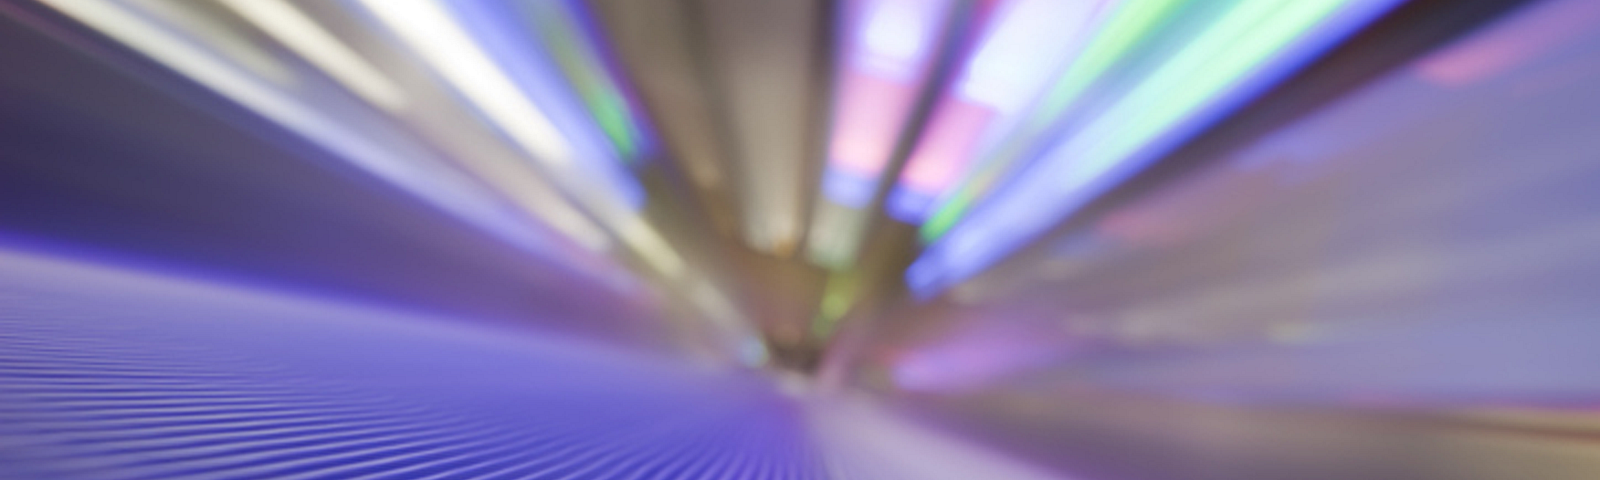 An abstract image of speeding lightways